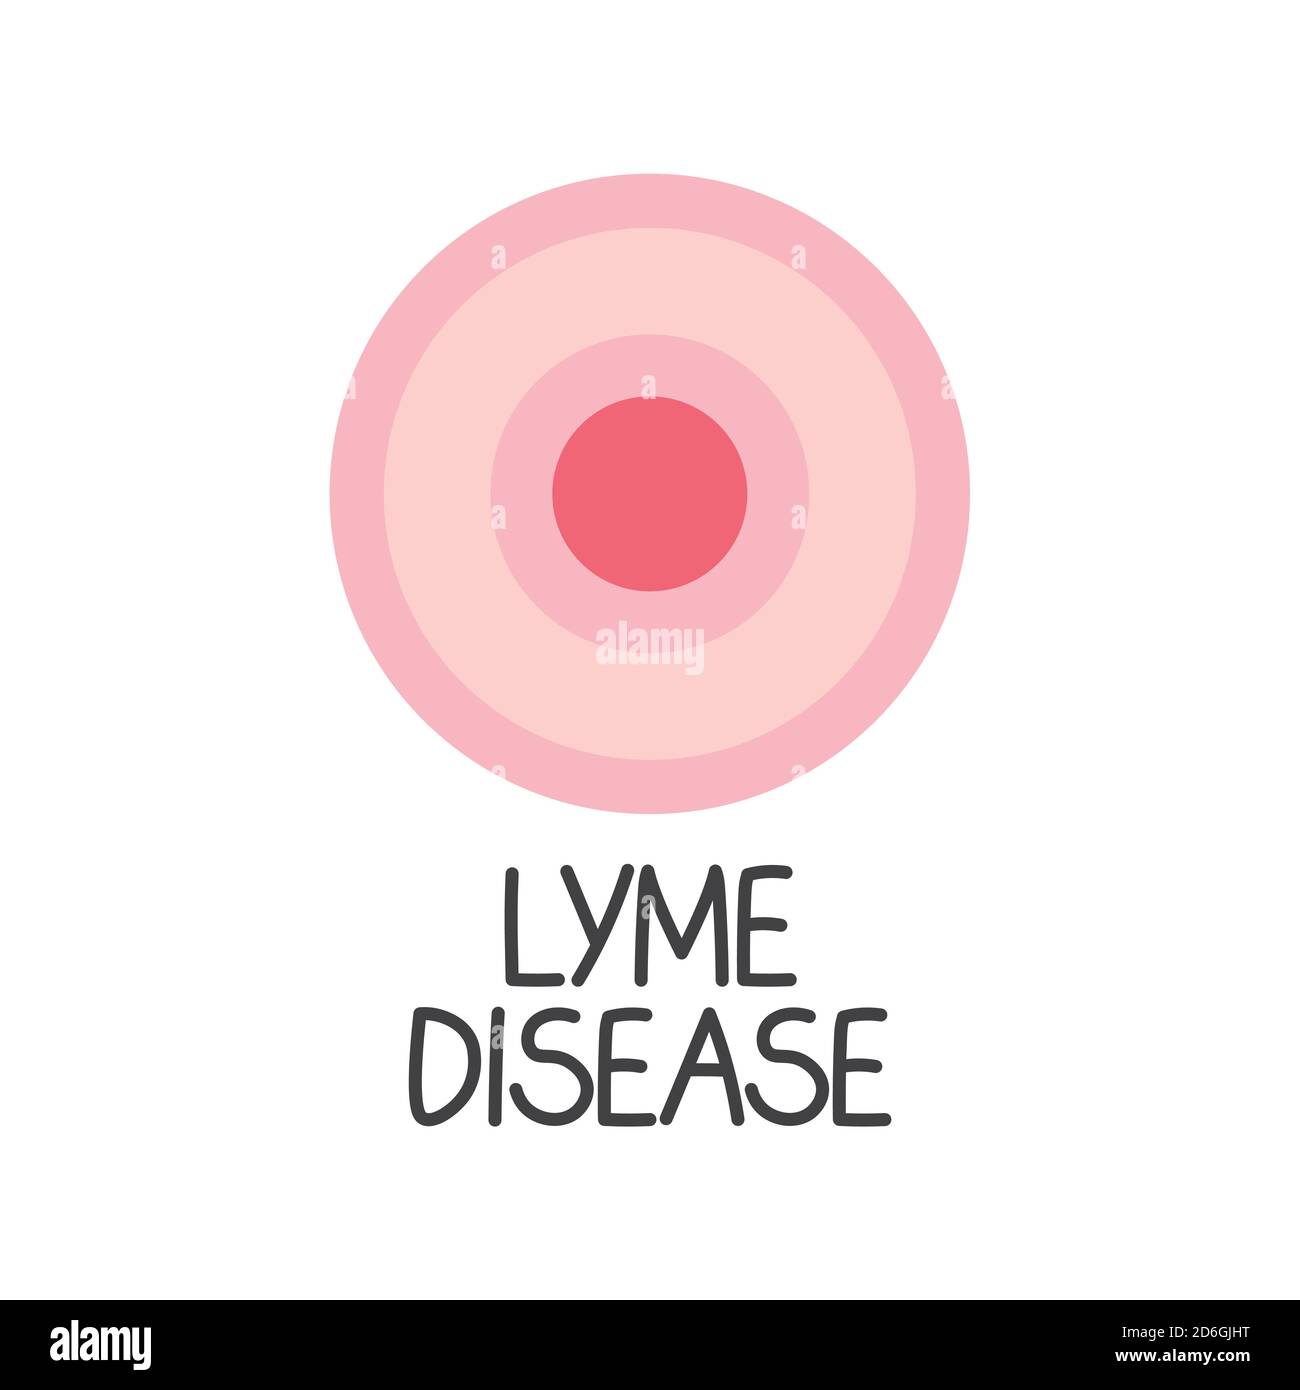 lyme-Borreliose Text und Erythema migrans Ausschlag Konzept- Vektor Illustration Stock Vektor